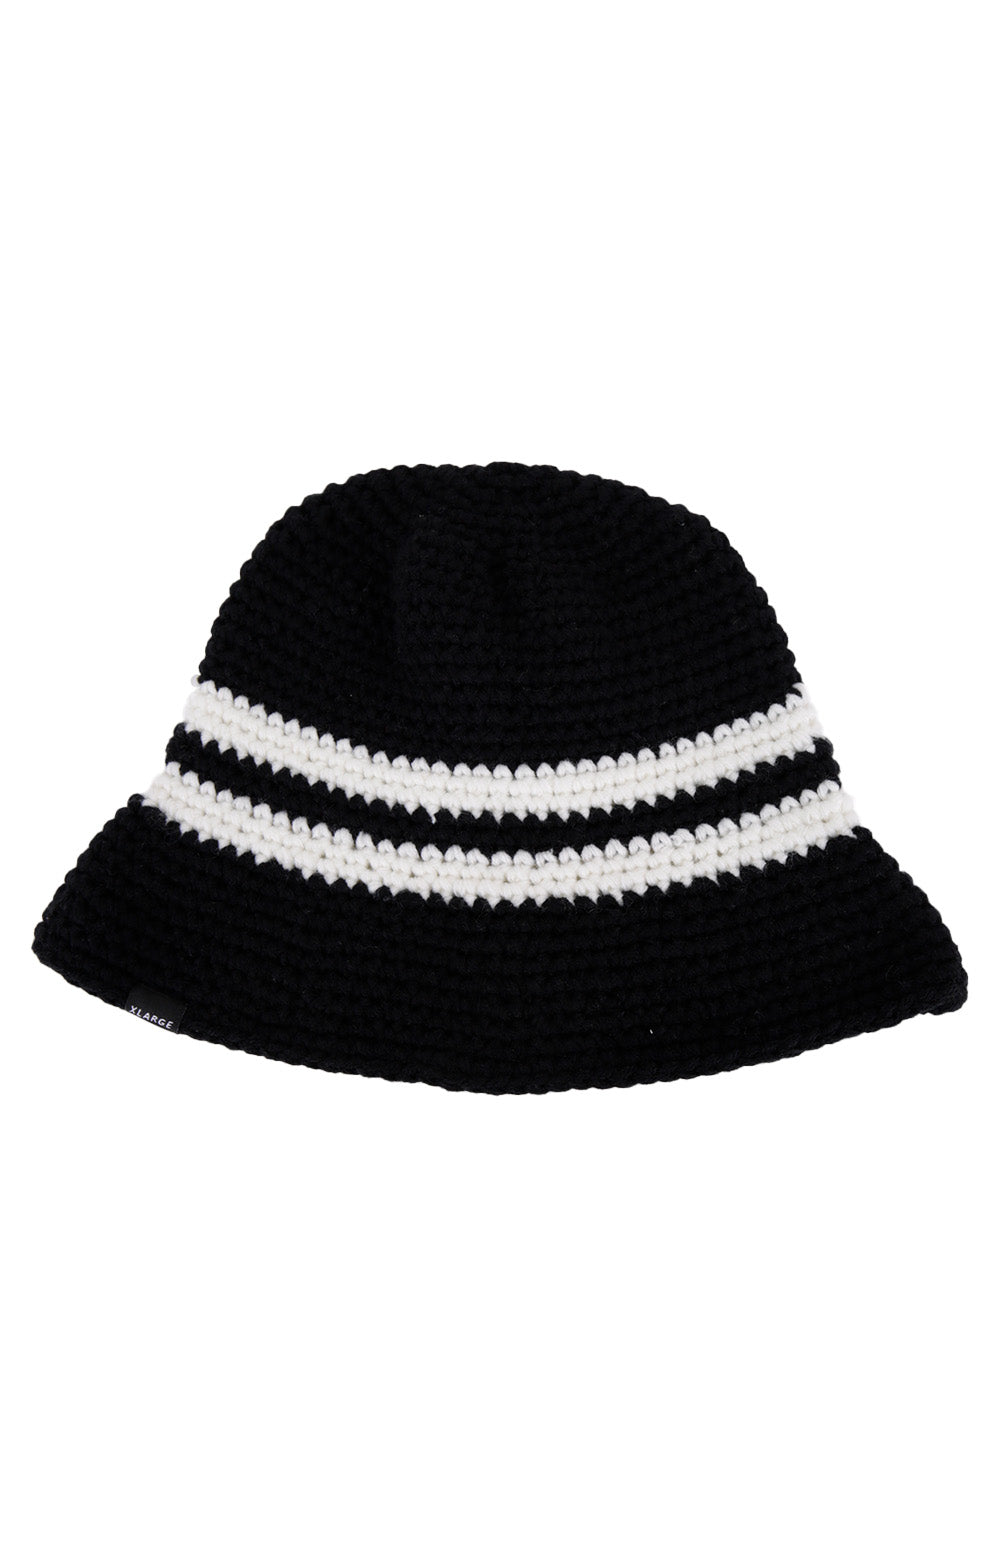 X-Large, Knitted Bucket Hat - Black M / Black